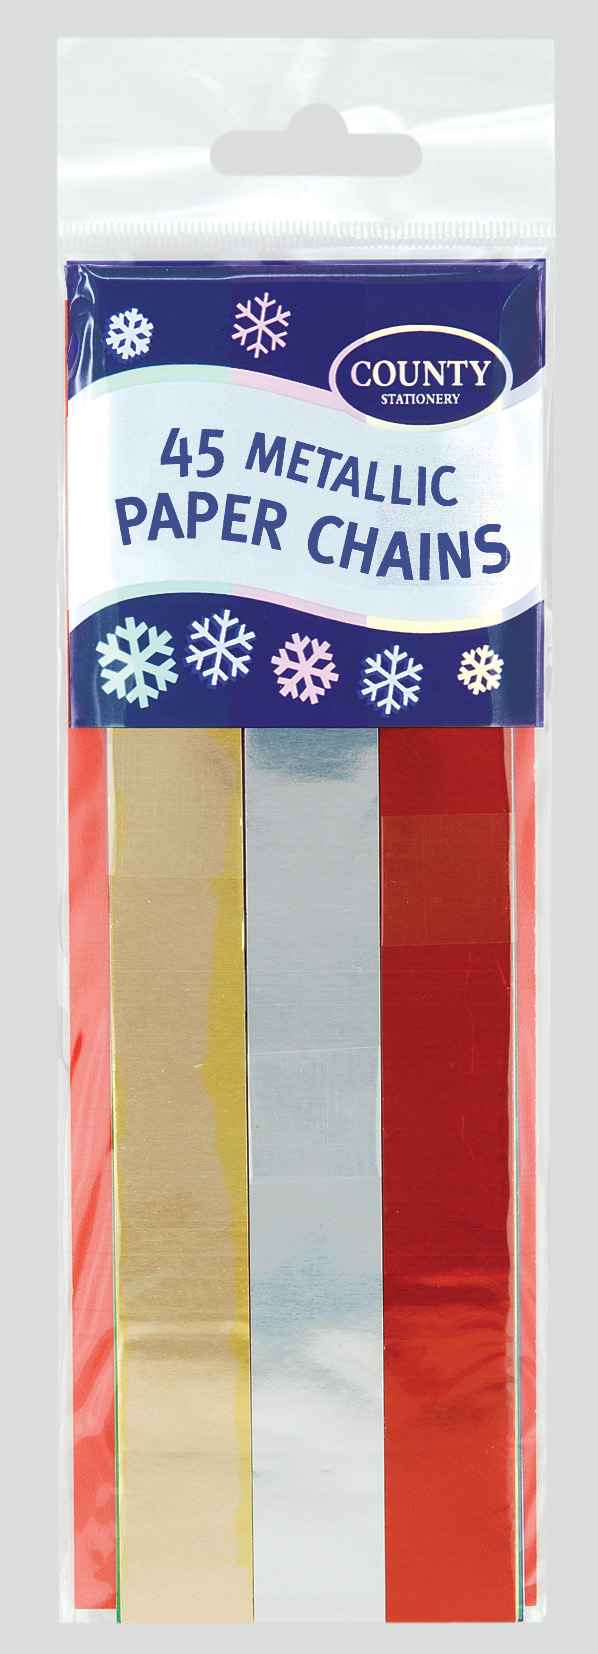 45 Metallic Paper Chains